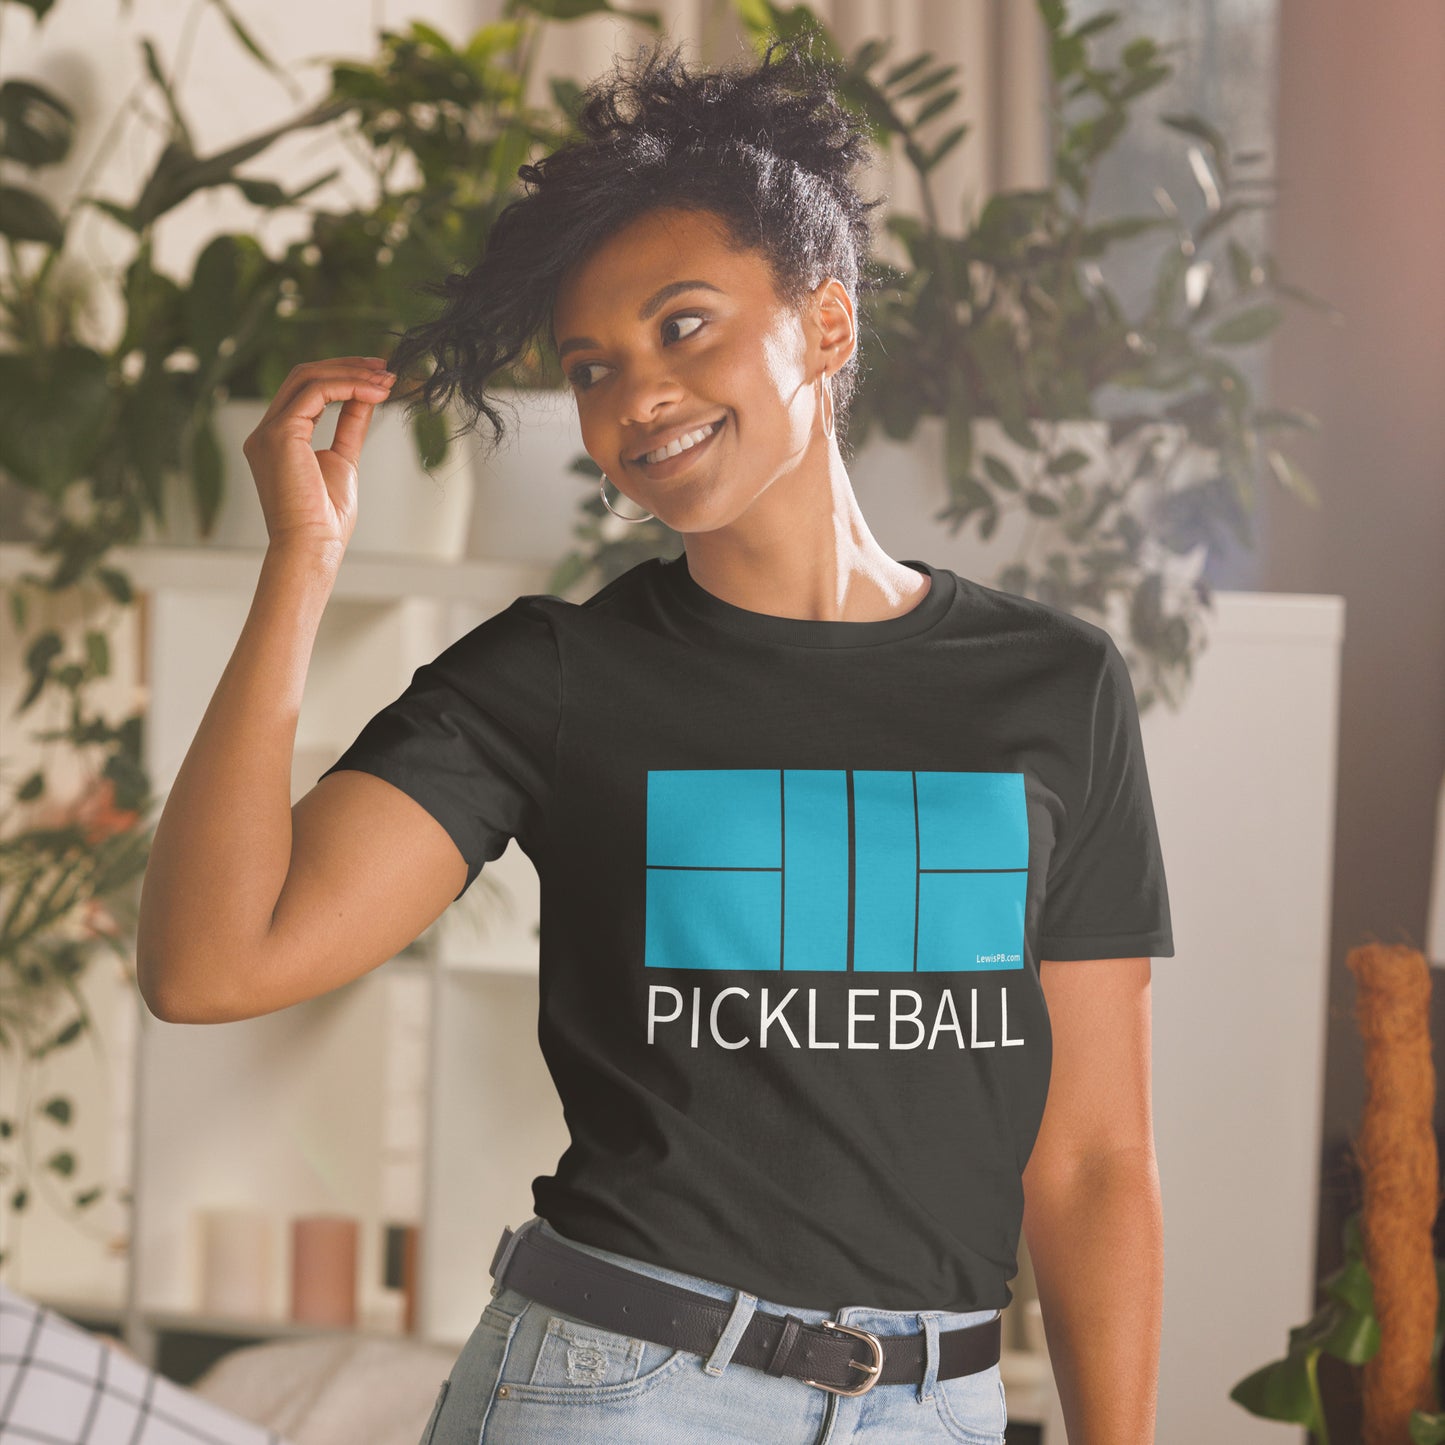 Women's Pickleball Shirt | Pickleball Court and Text "PICKLEBALL"